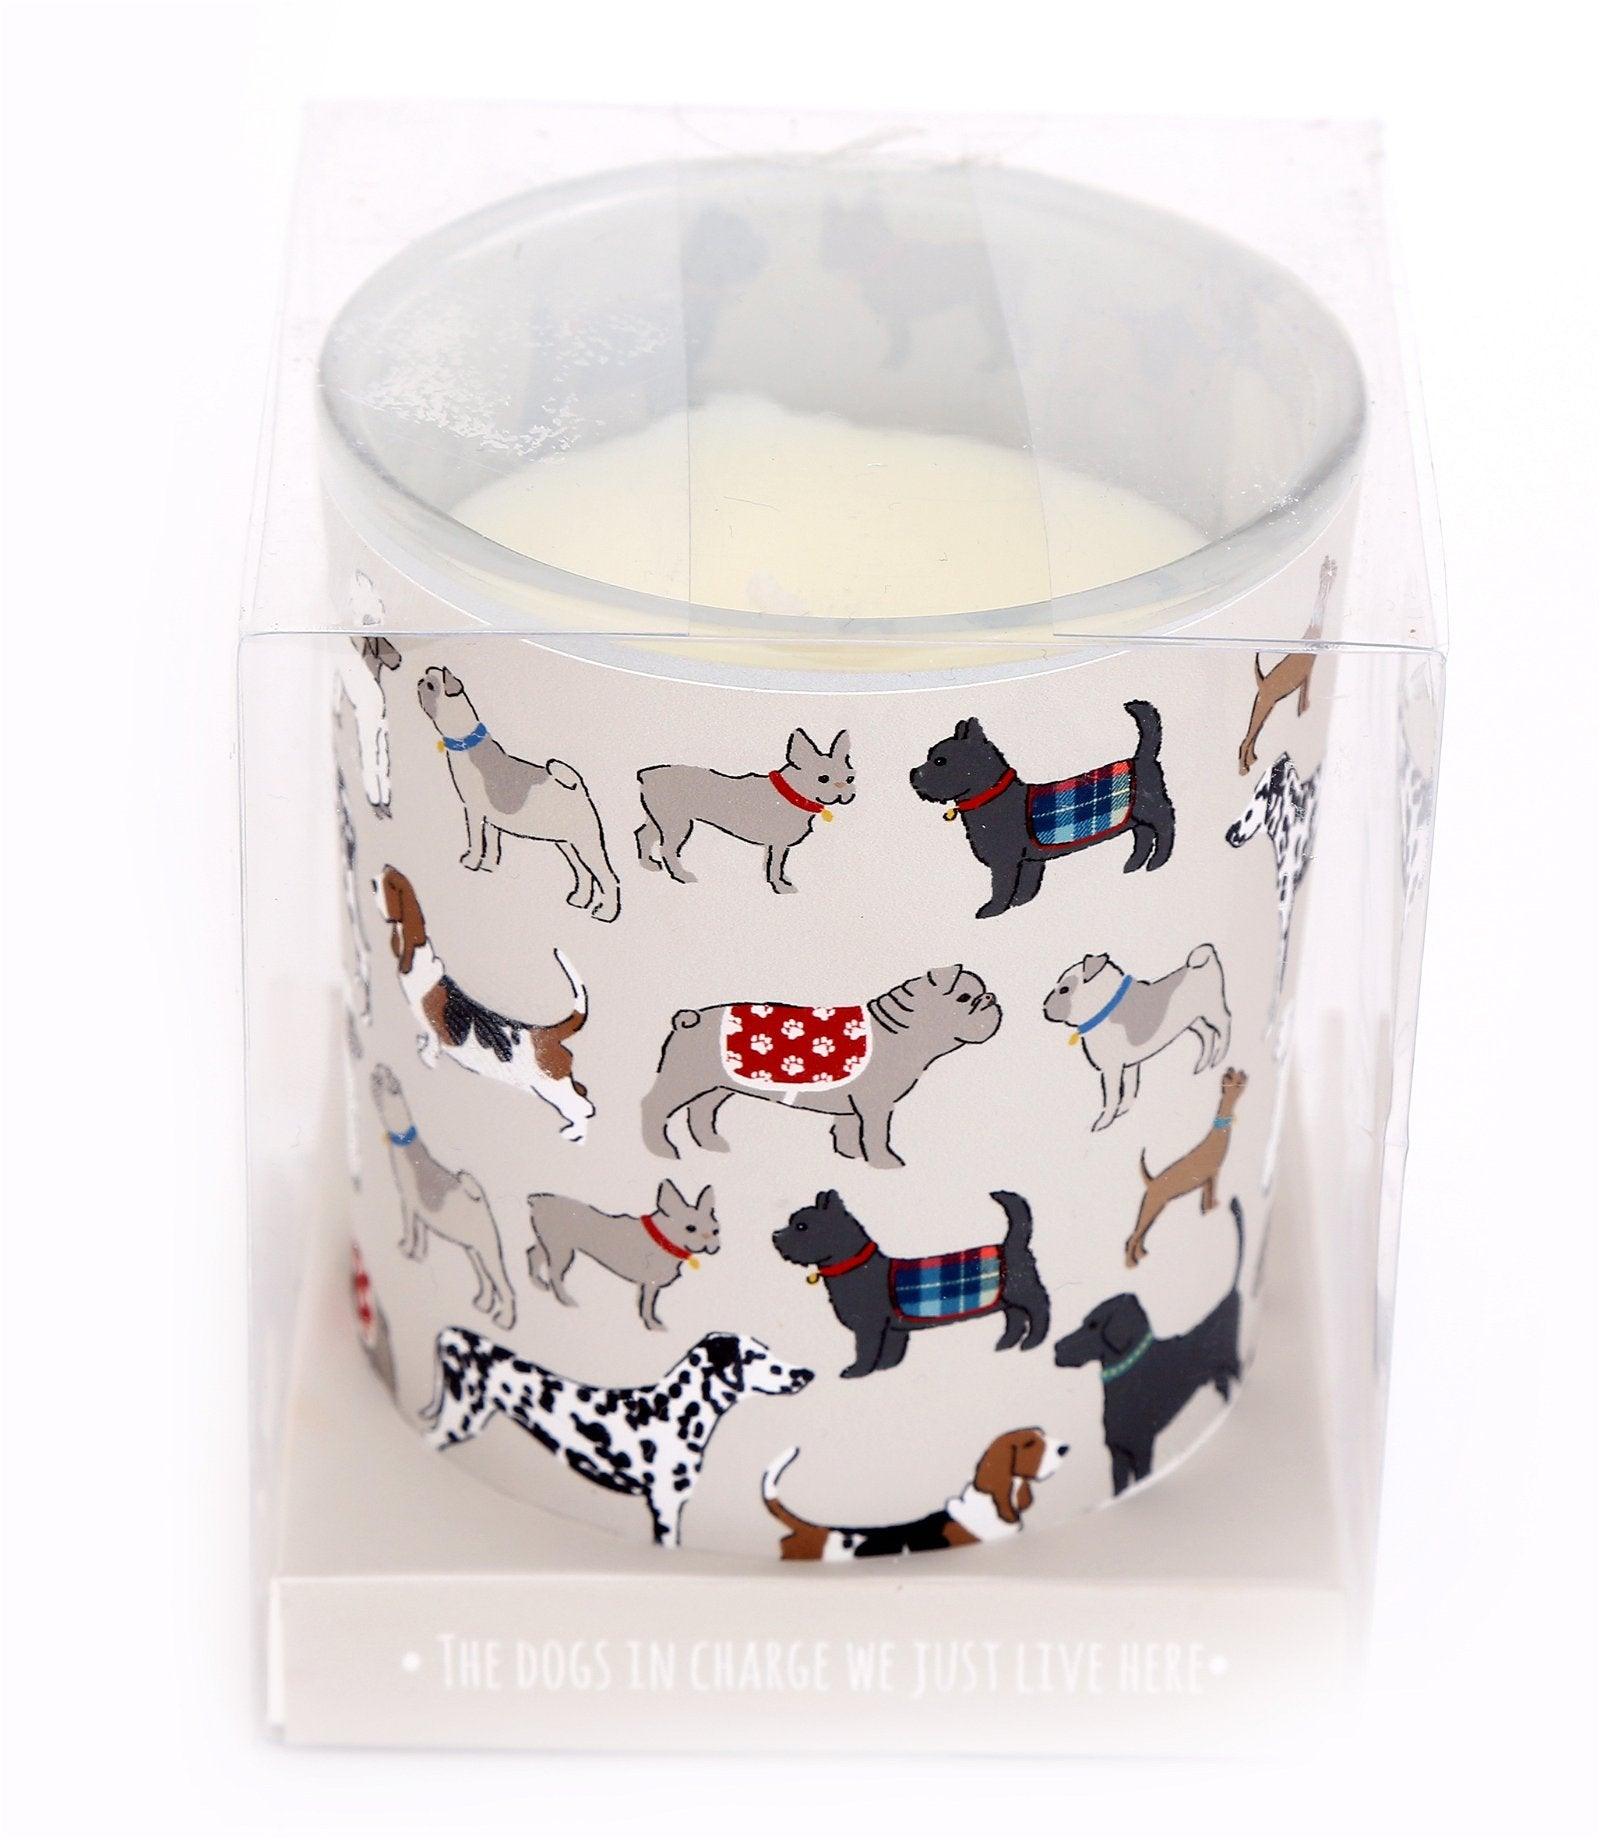 Pet Dog Design Candle Pot 17cm - £16.99 - Candle Holders & Plates 